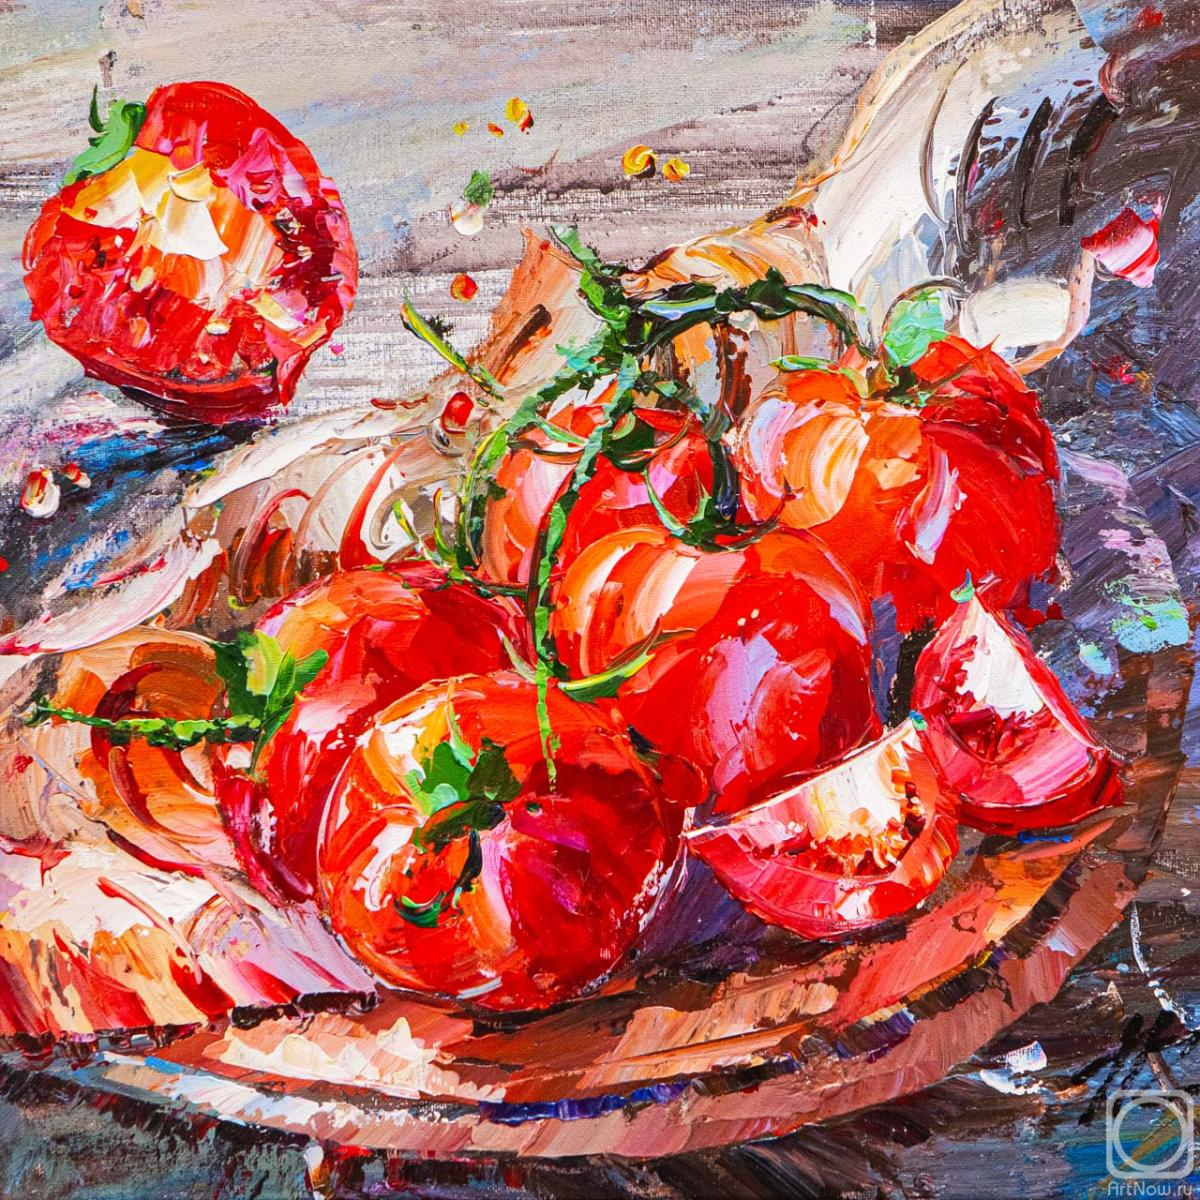 Rodries Jose. Red tomatoes